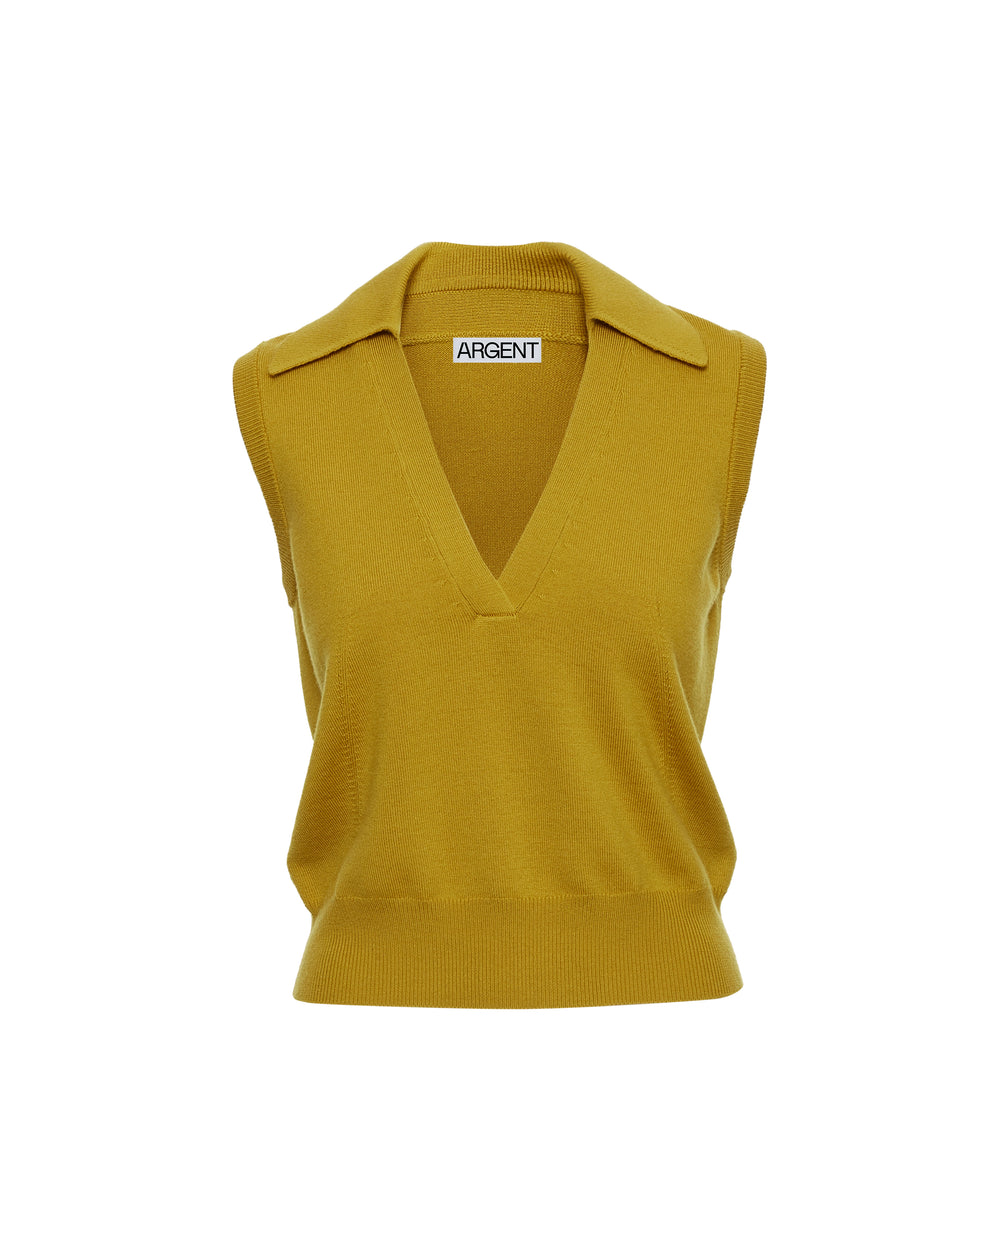 Collared Sleeveless Knit in Merino Wool | Mustard